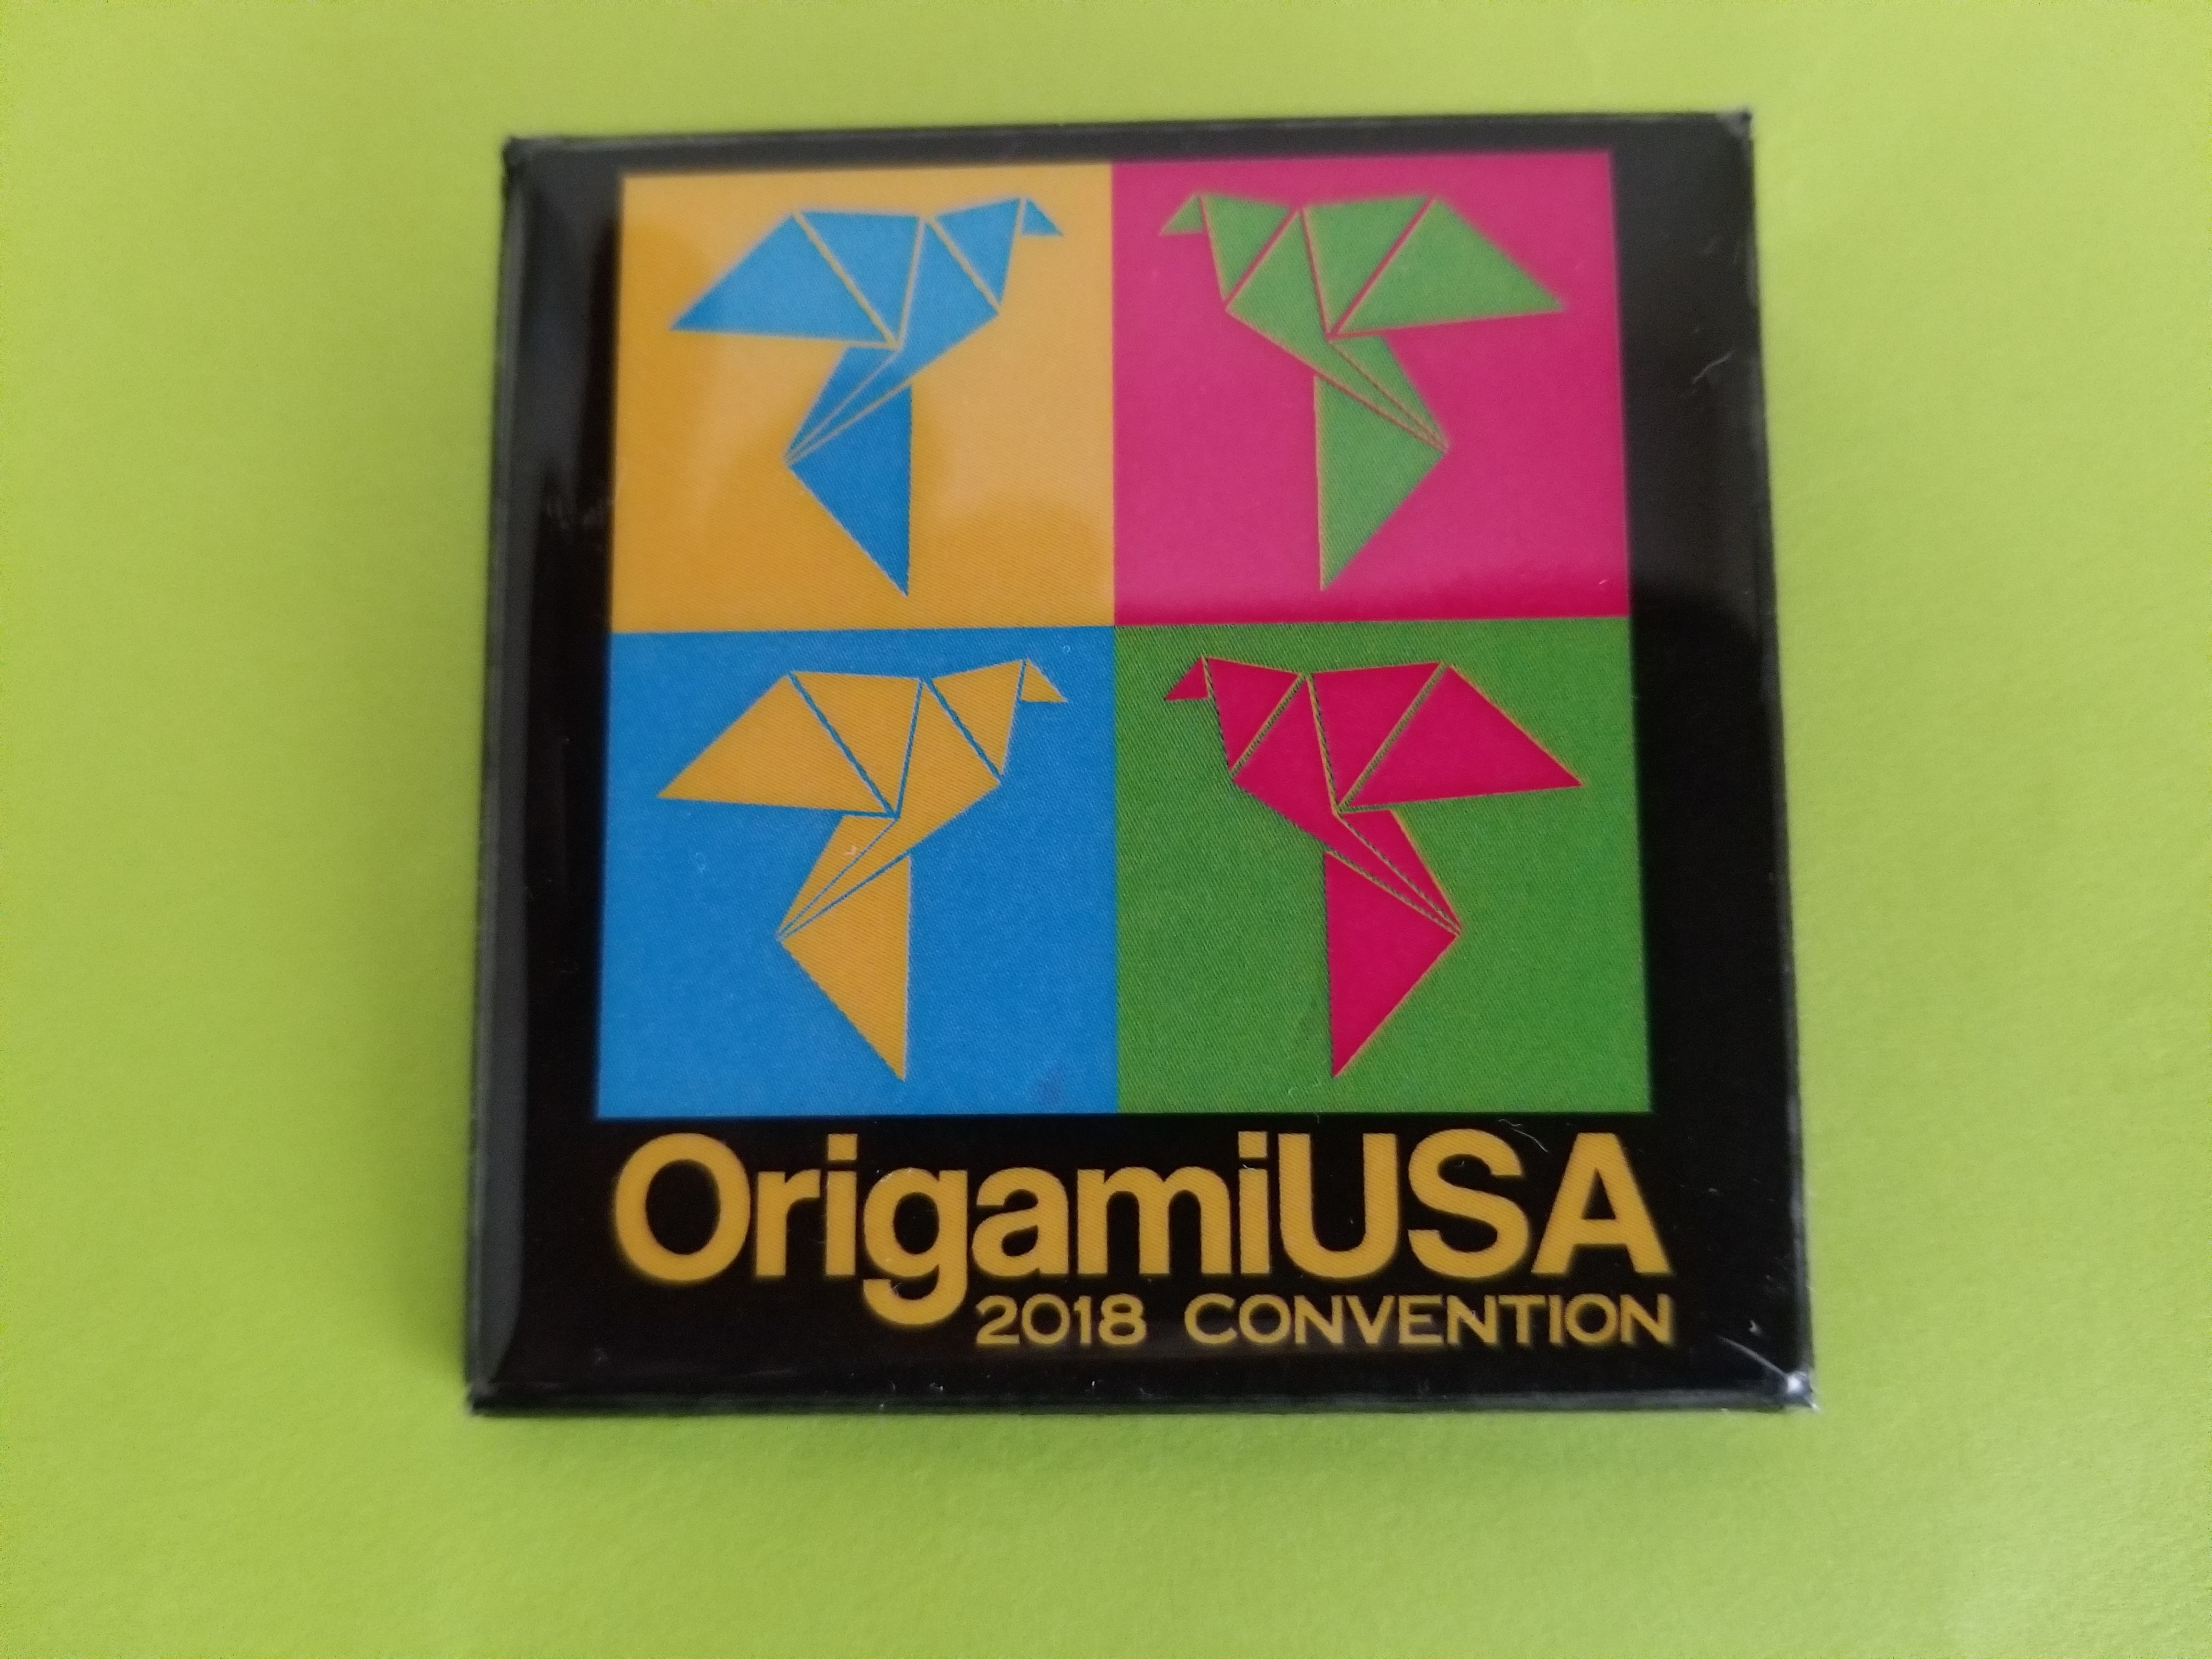 OrigamiUSA 2018 Convention Pin